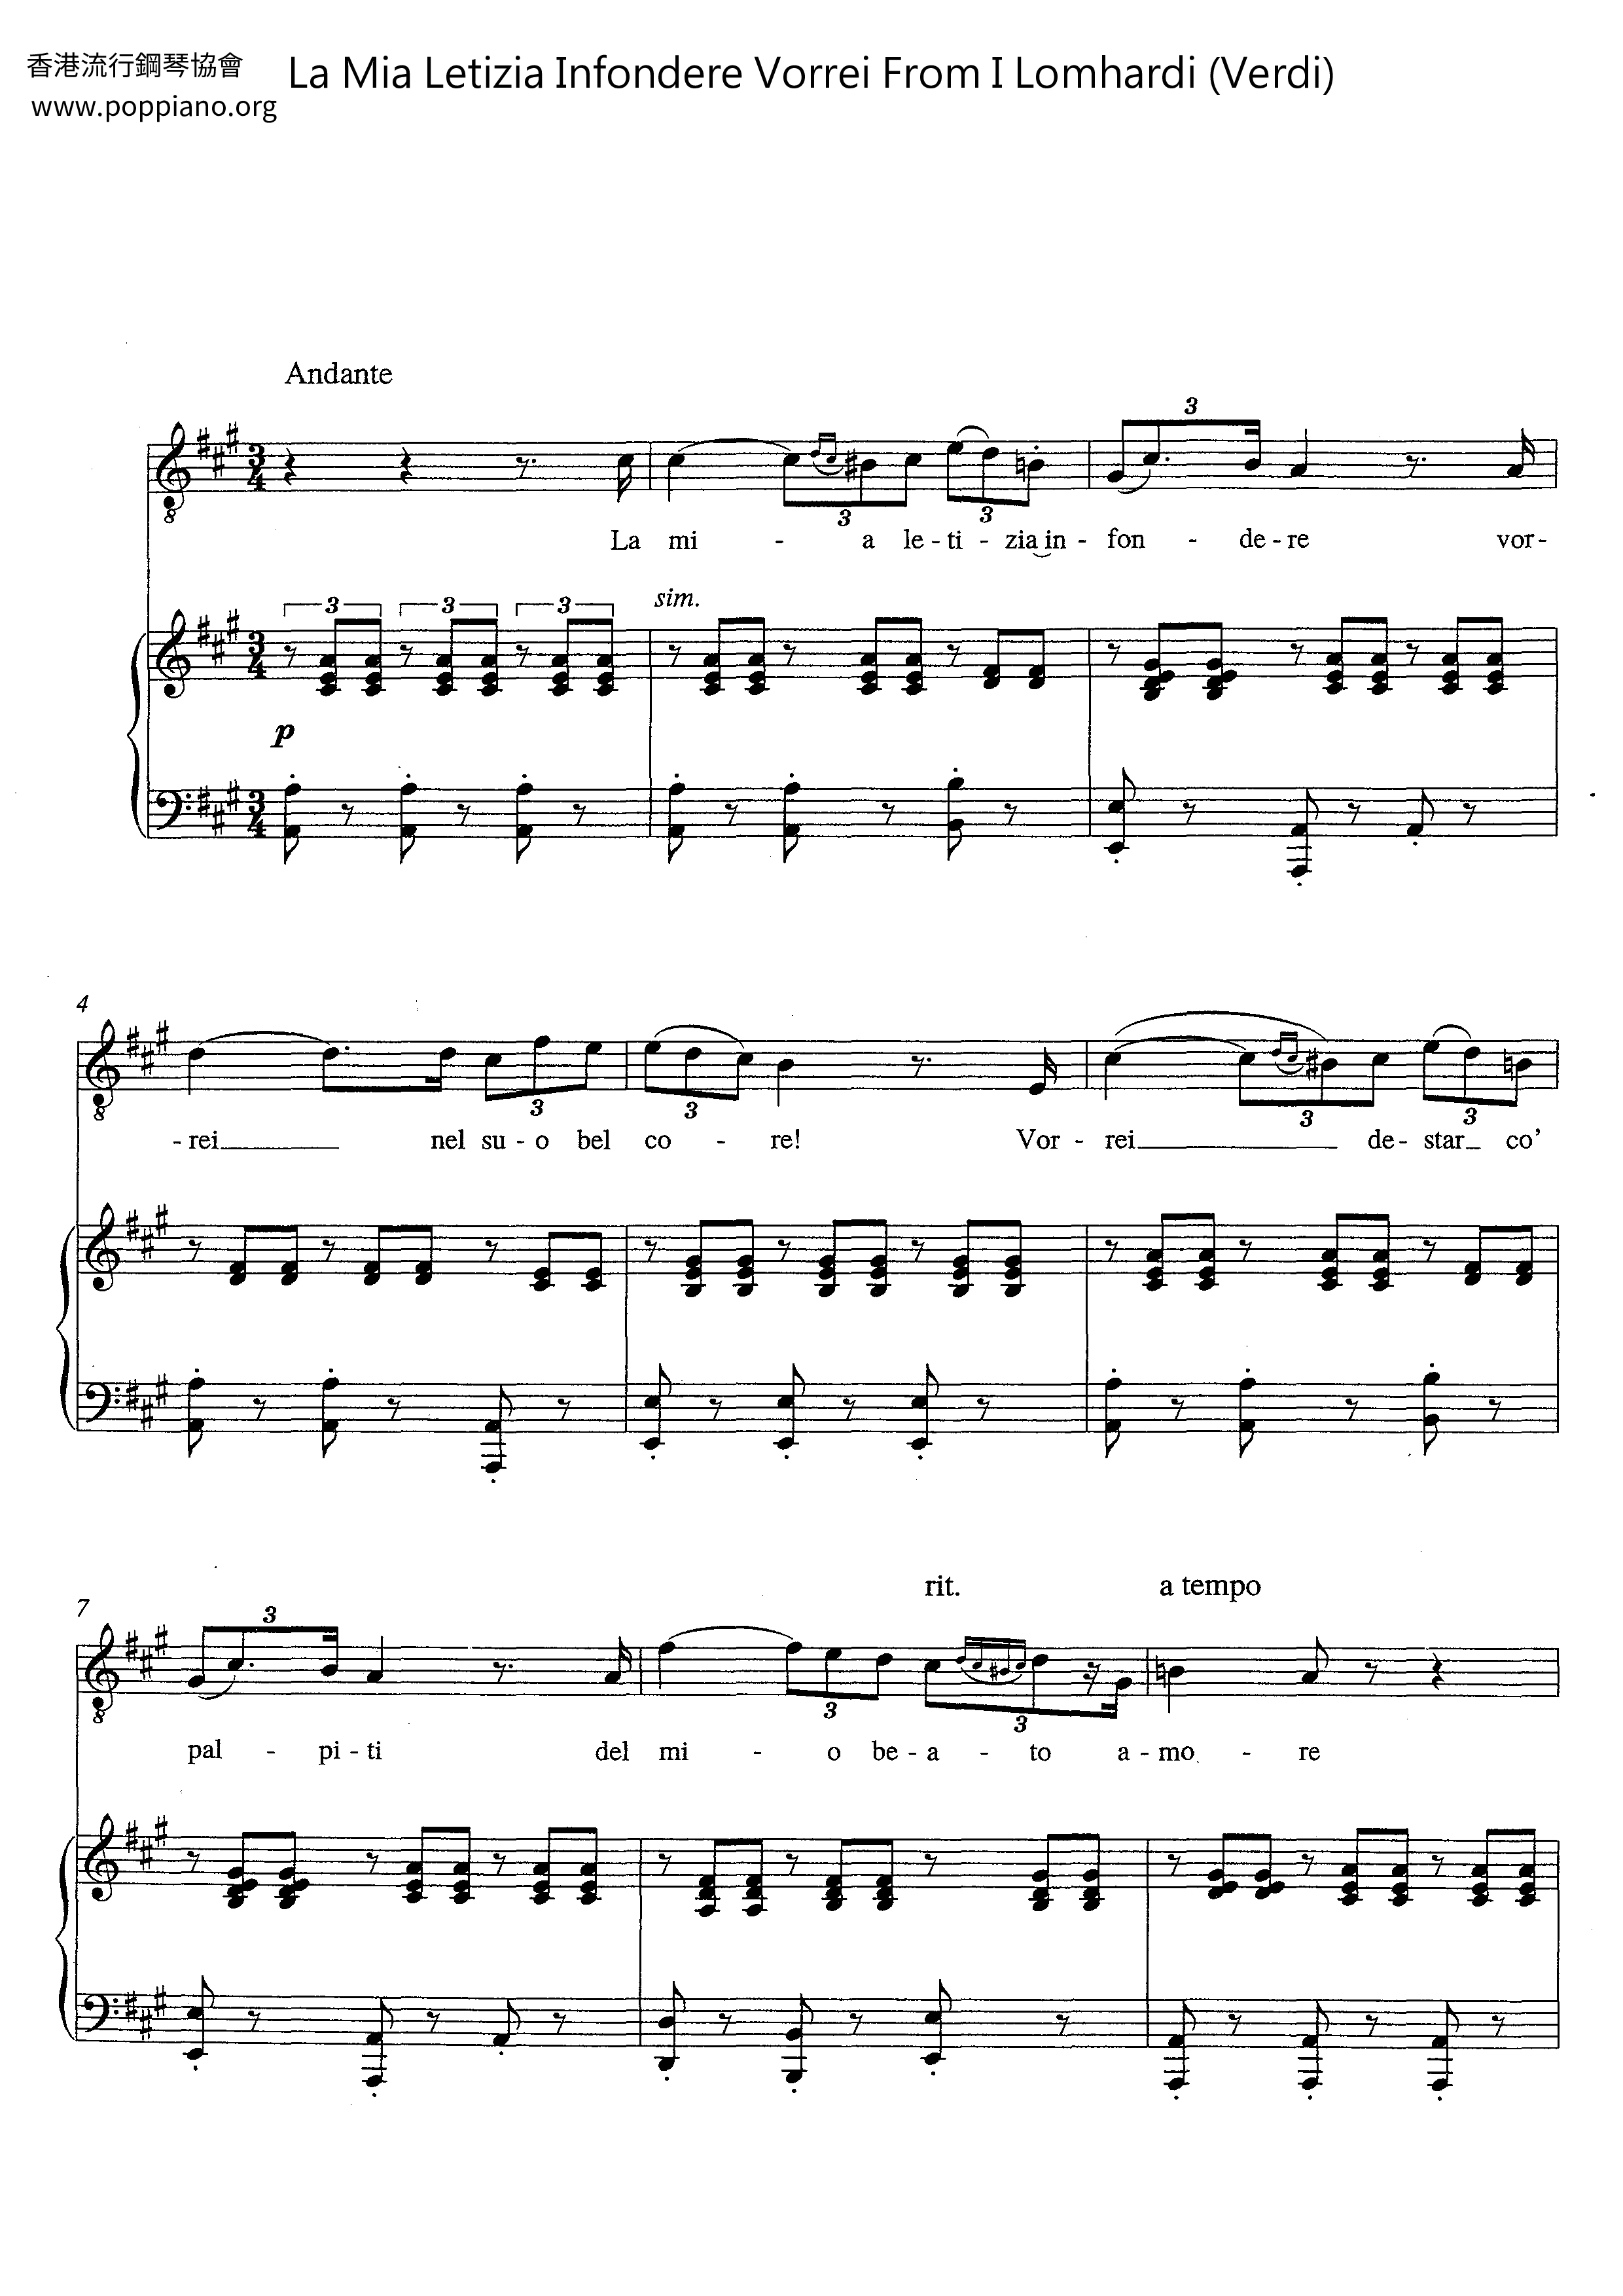 La Mia Letizia Infondere Vorrei From I Lomhardi (Verdi)ピアノ譜